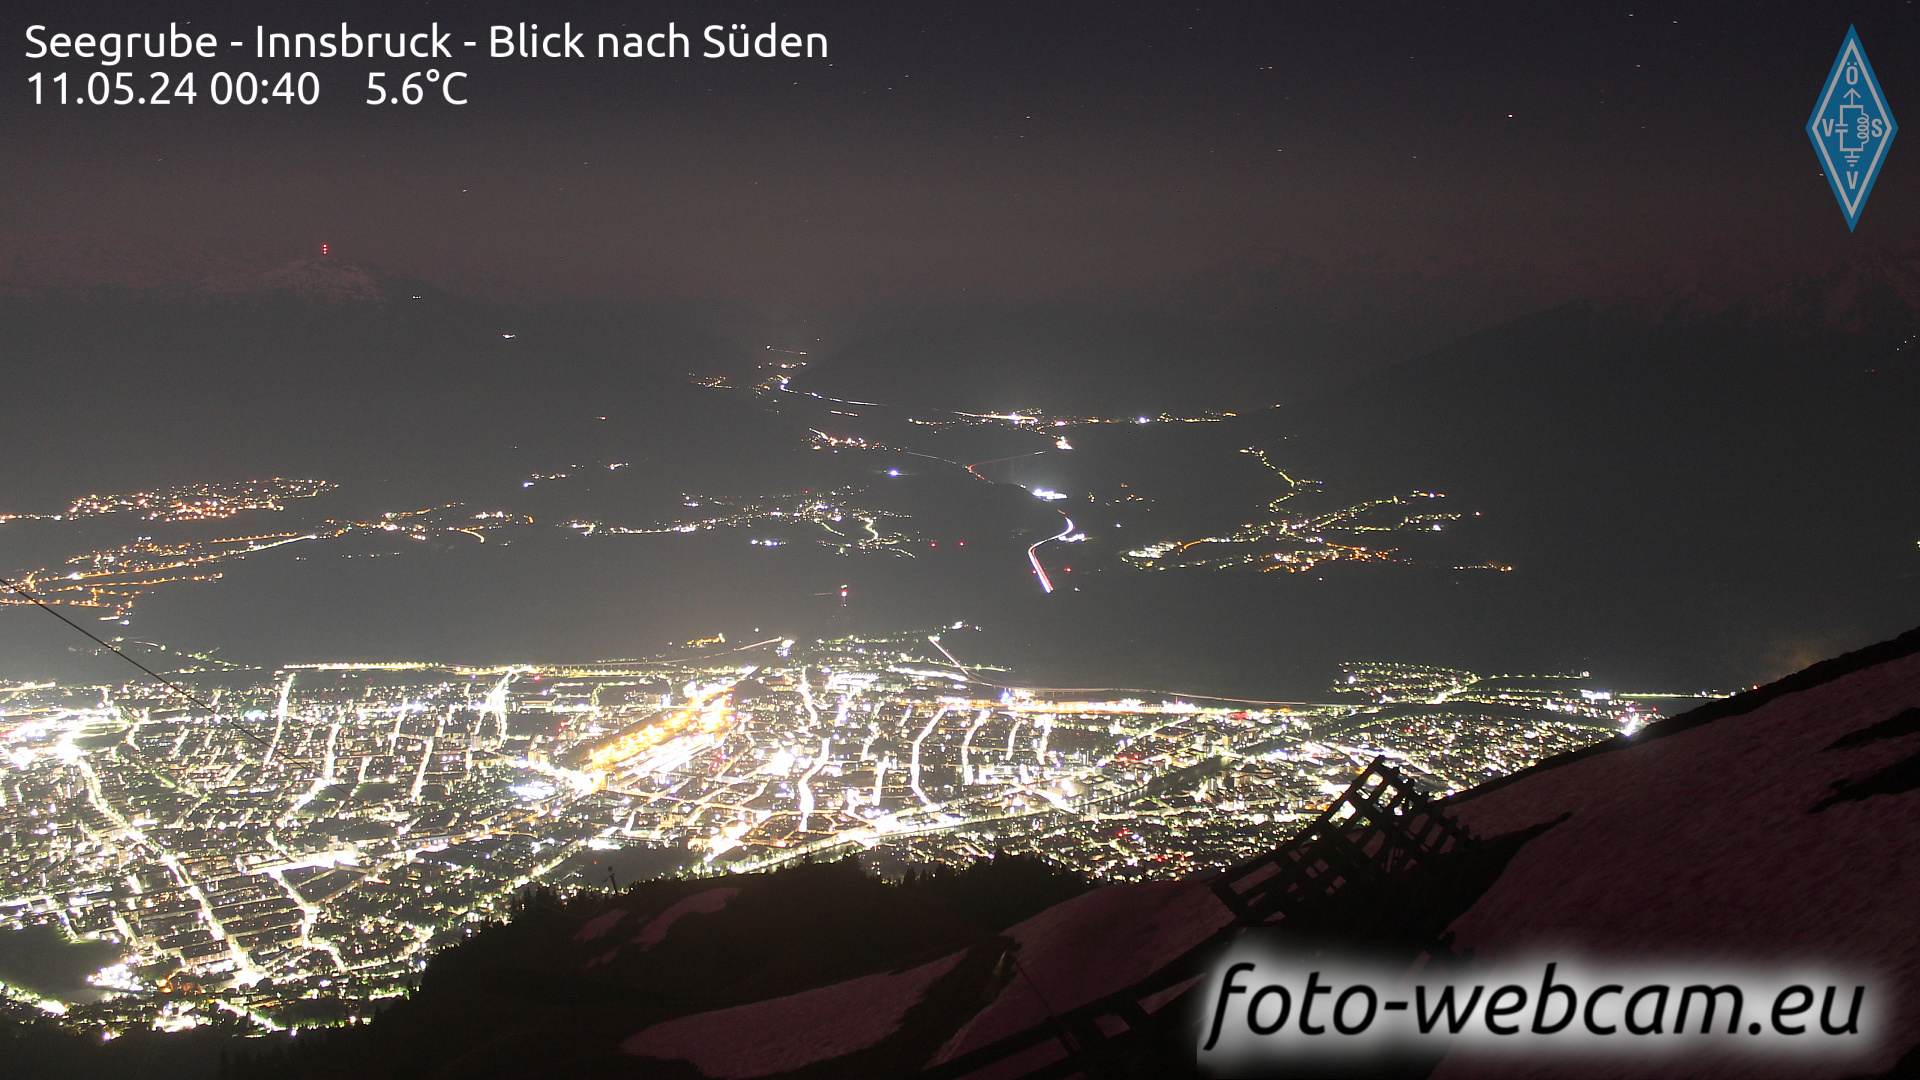 Innsbruck Lu. 00:48